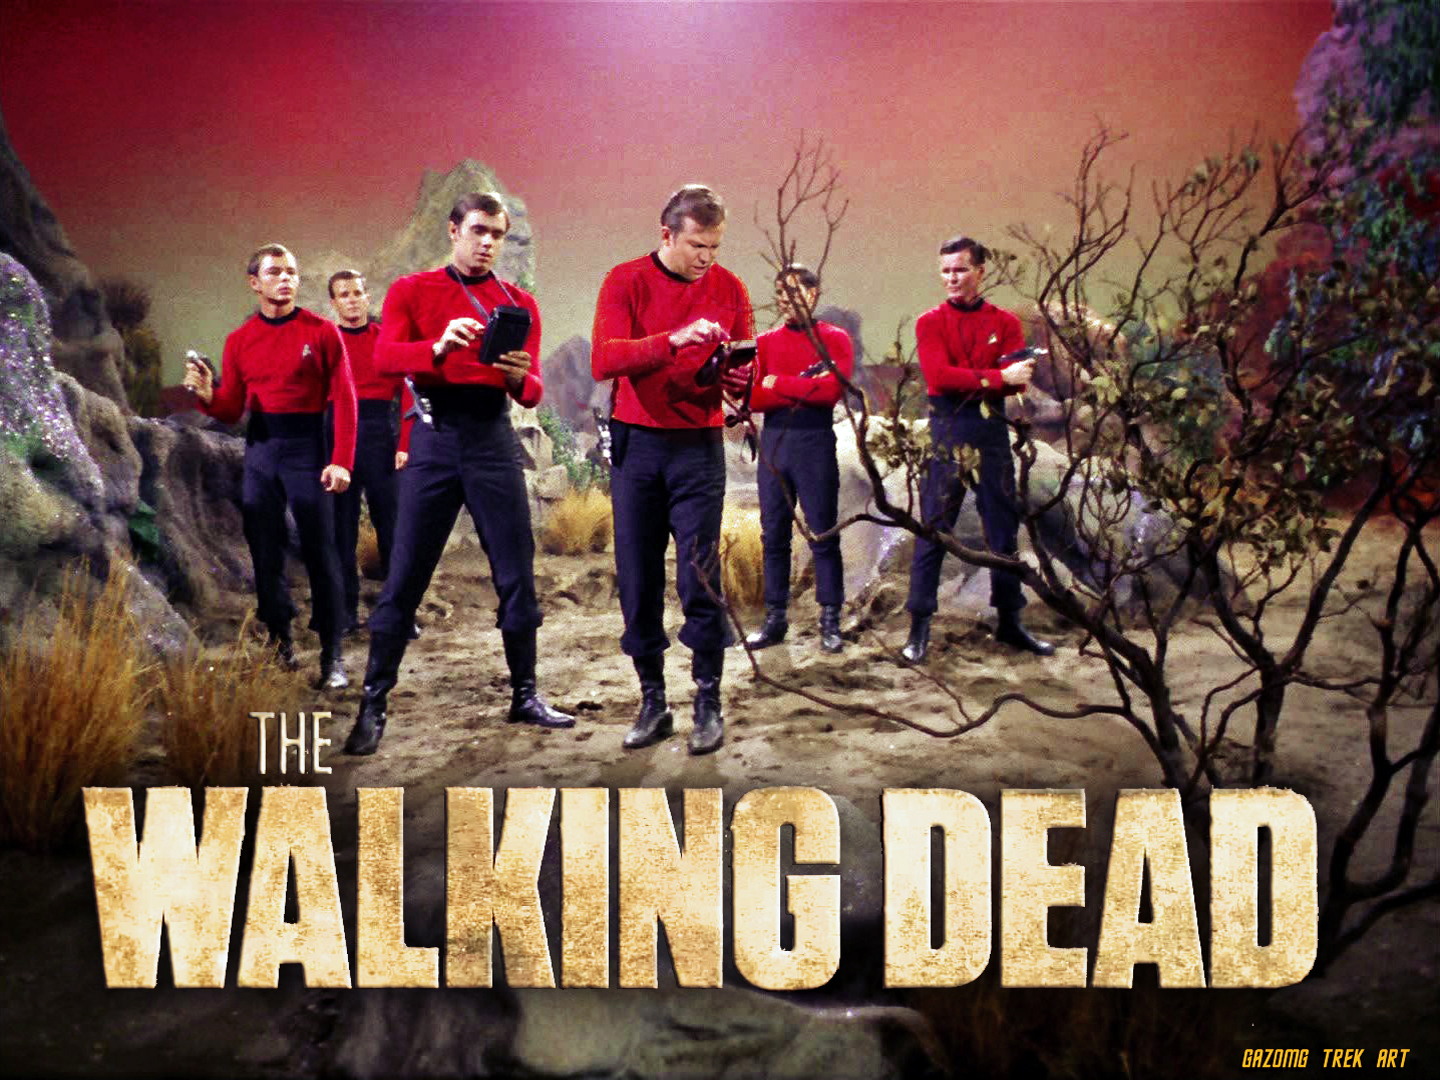 Star Trek Redshirt #6 - The Walking Dead by gazomg on ...